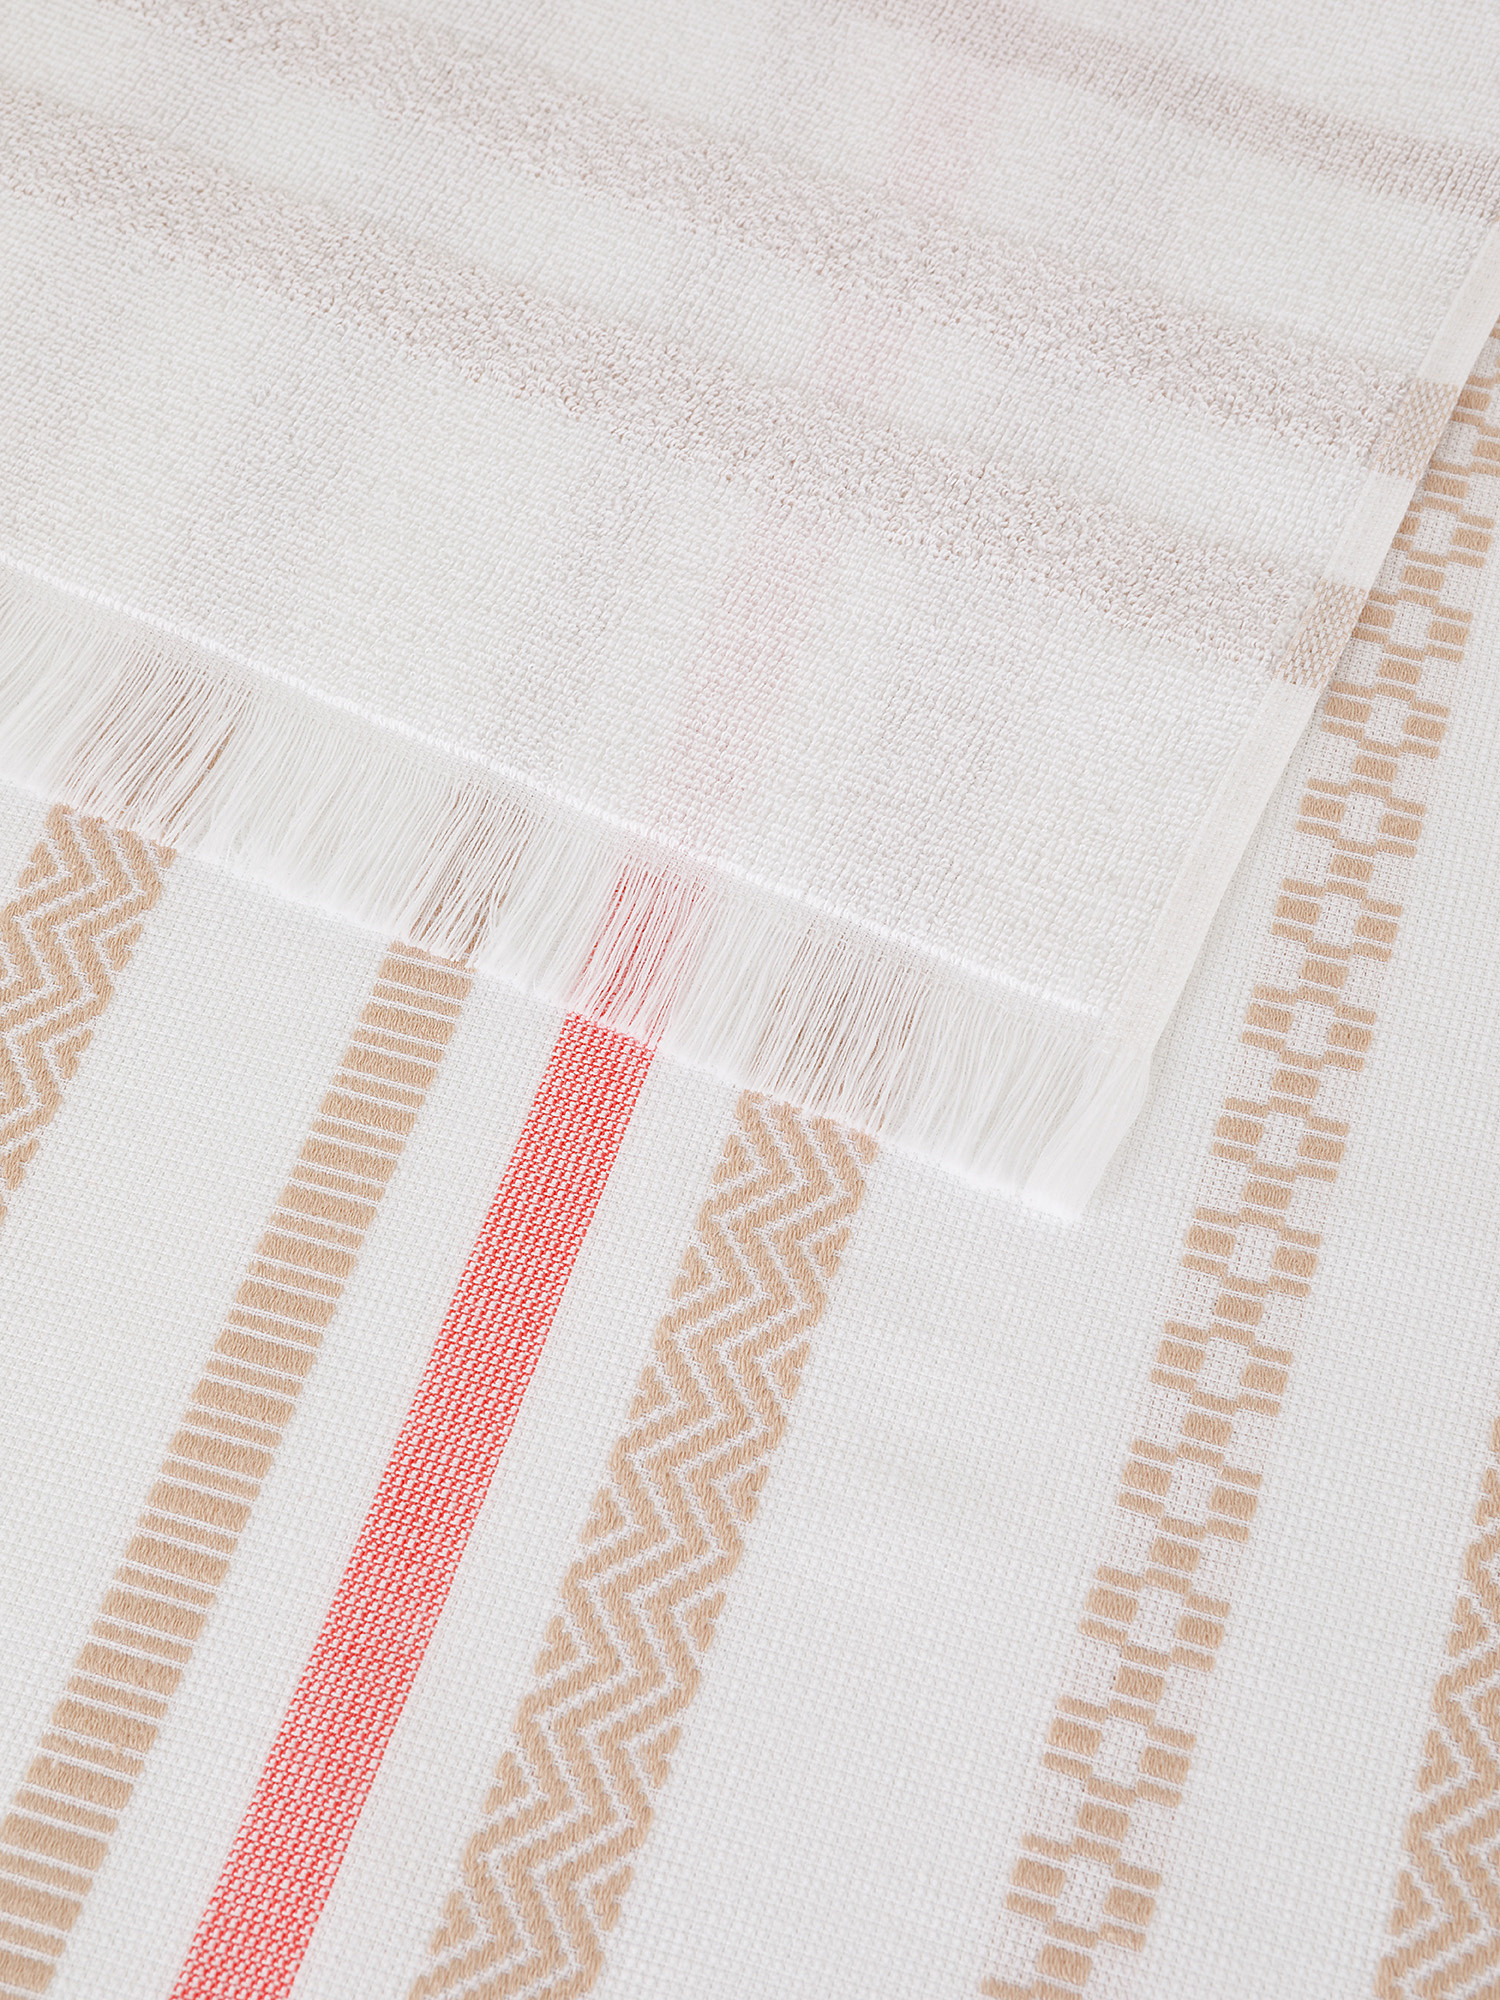 Striped jacquard cotton hammam beach towel, Beige, large image number 1